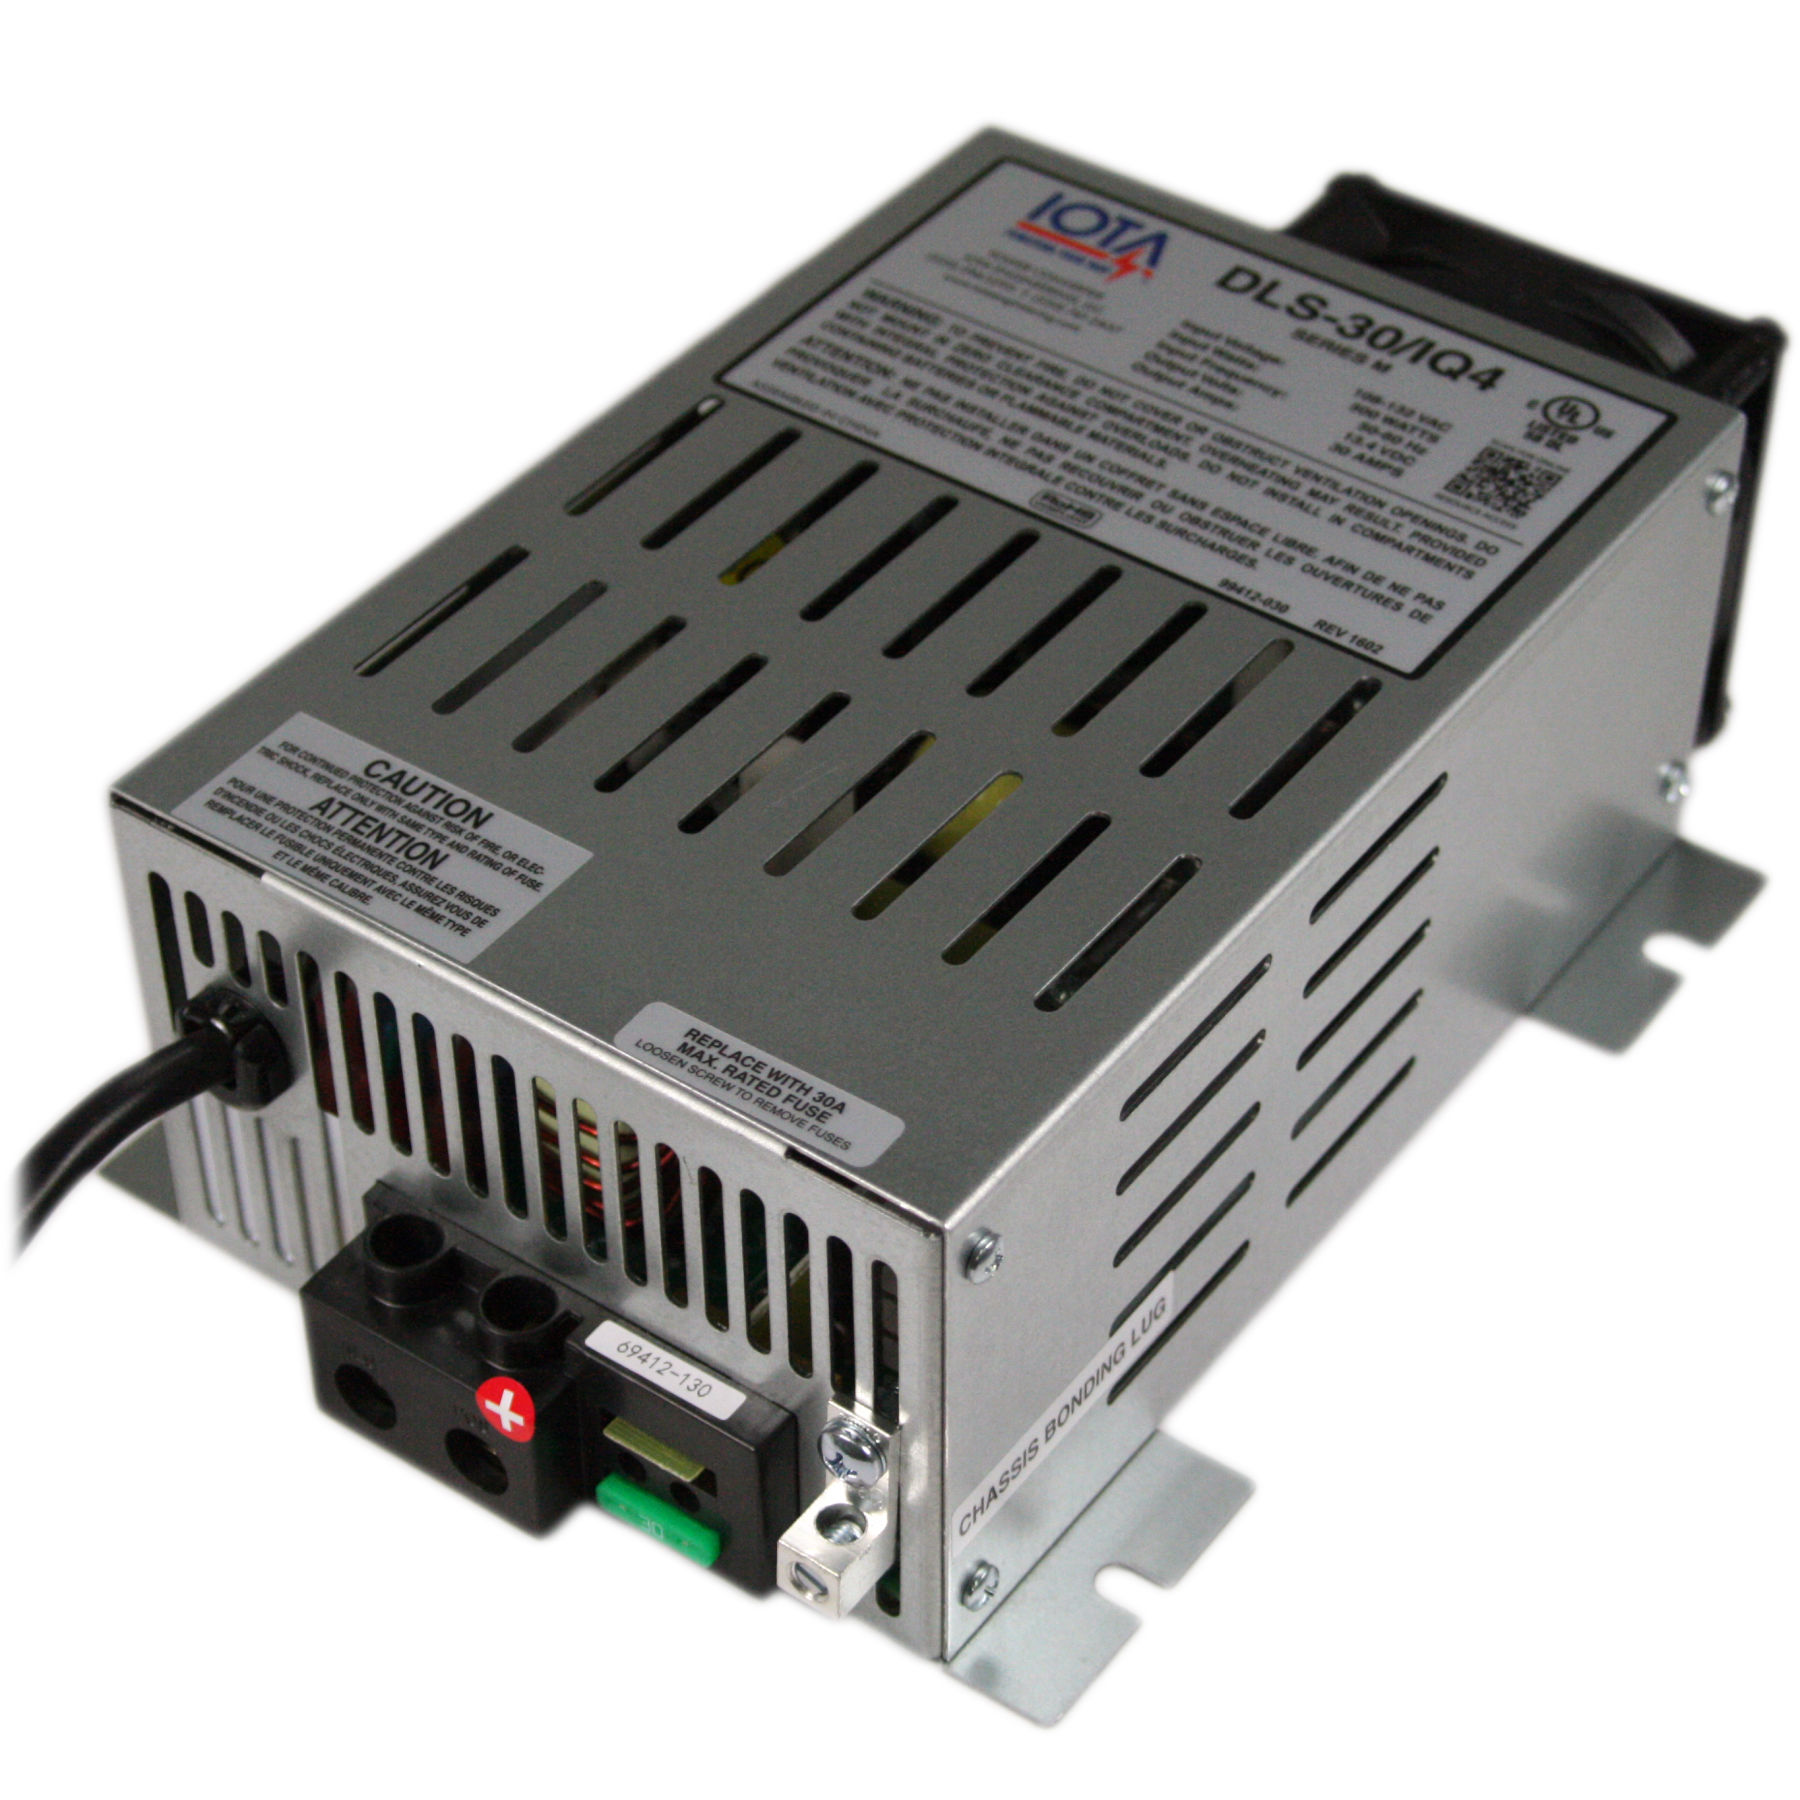 IOTA DLS-30/IQ4 12v 30 Amp Converter/Charger Power-Supply